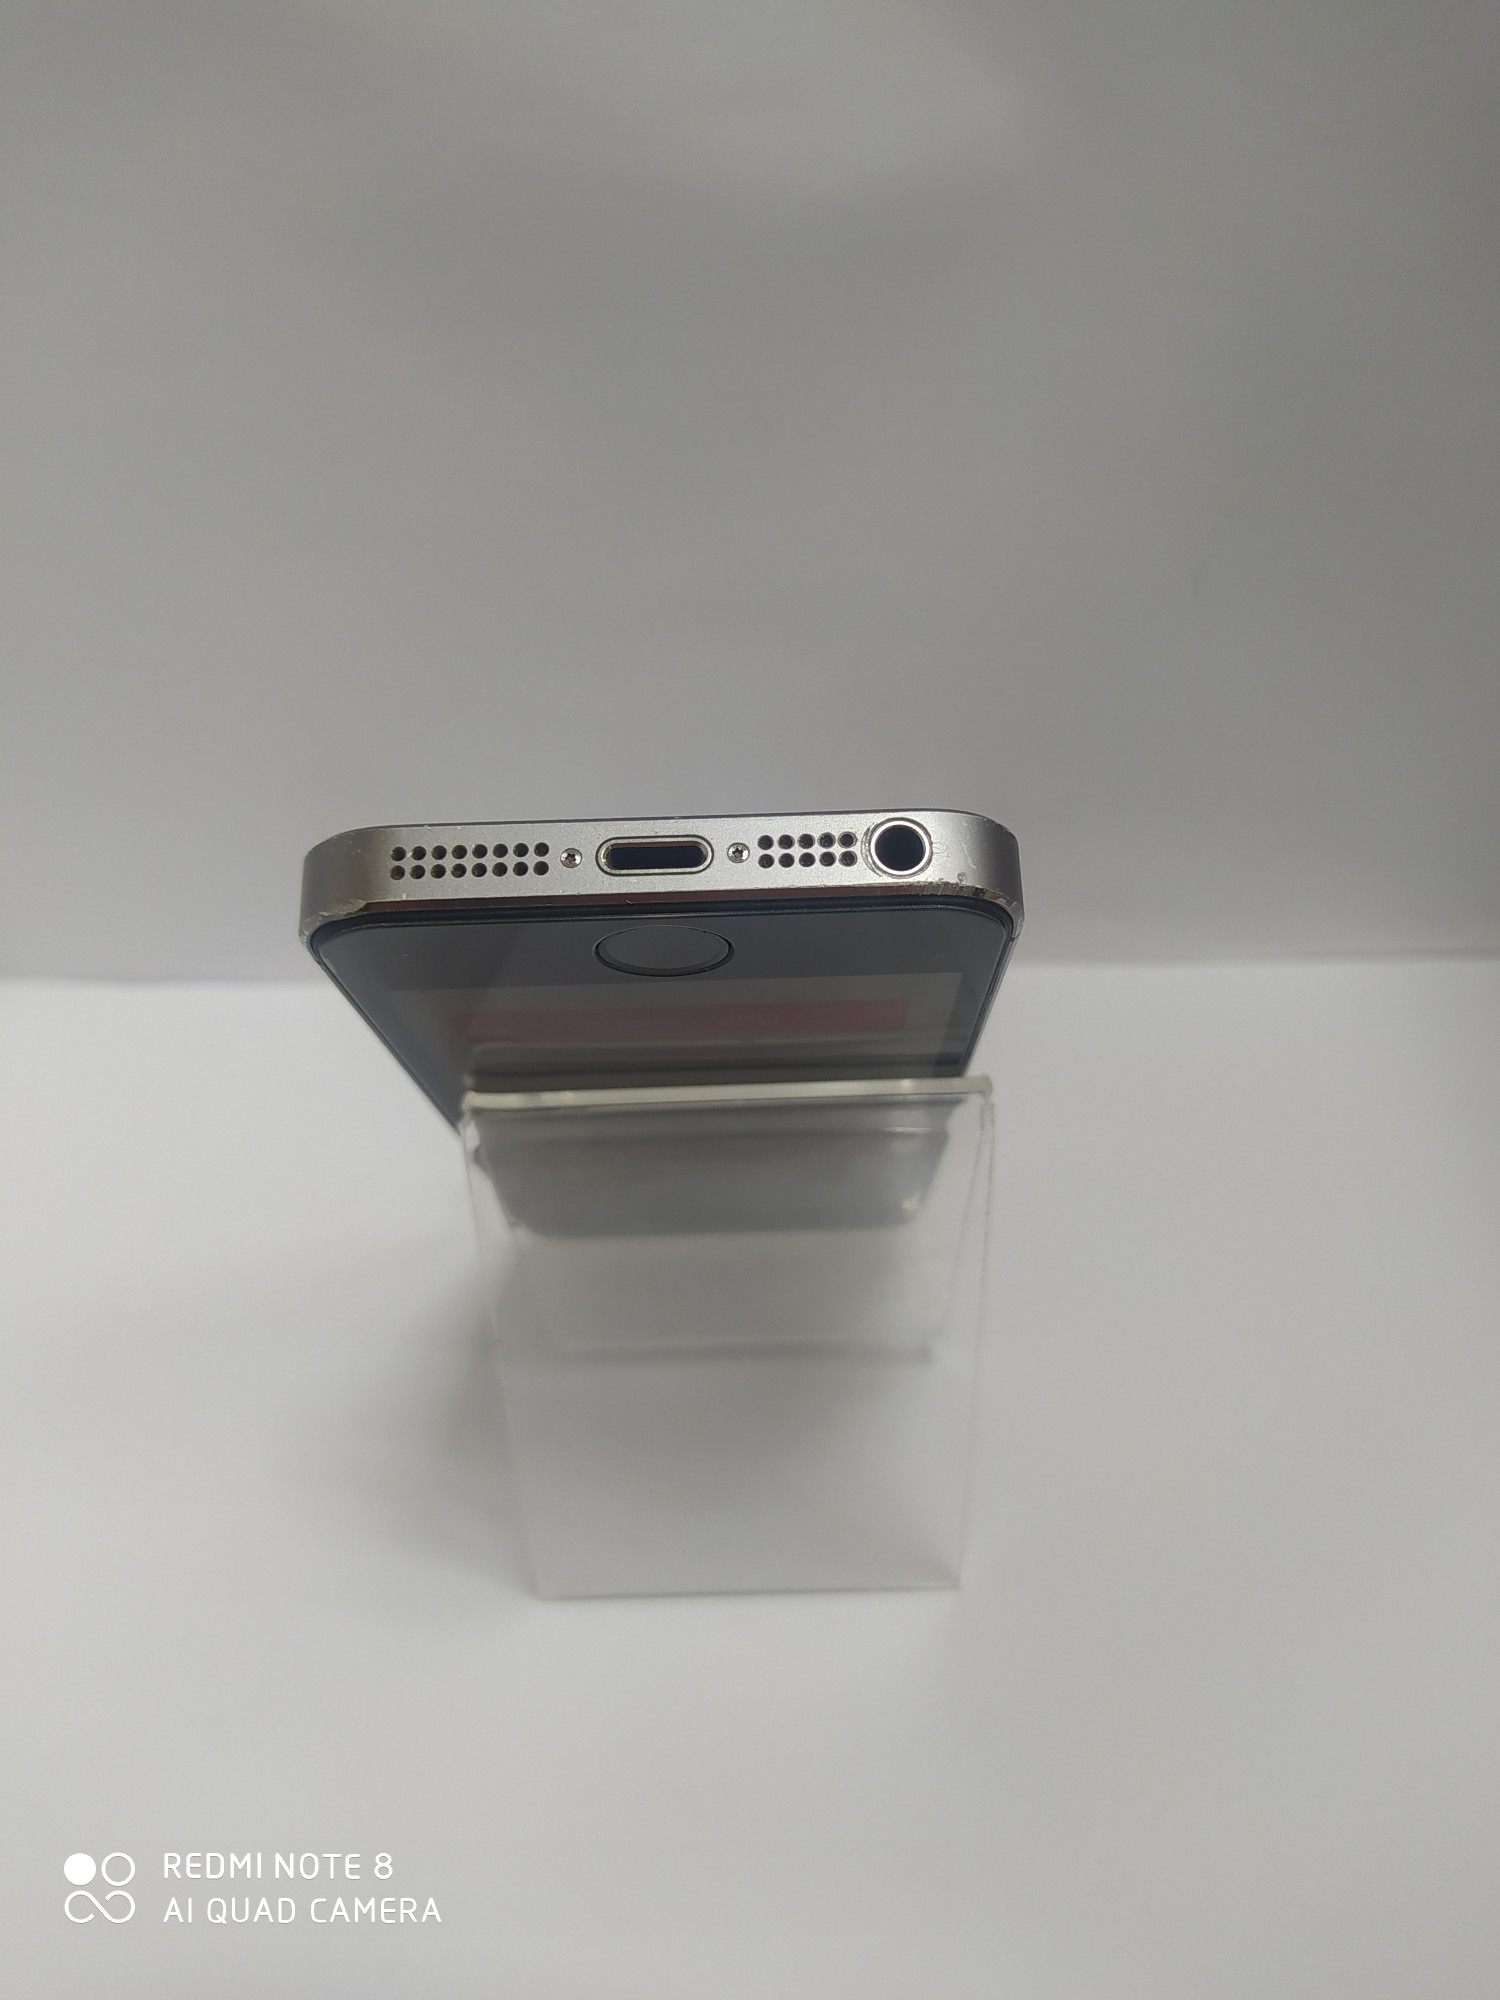 Apple iPhone 5S 16Gb Space Gray (ME432) 4